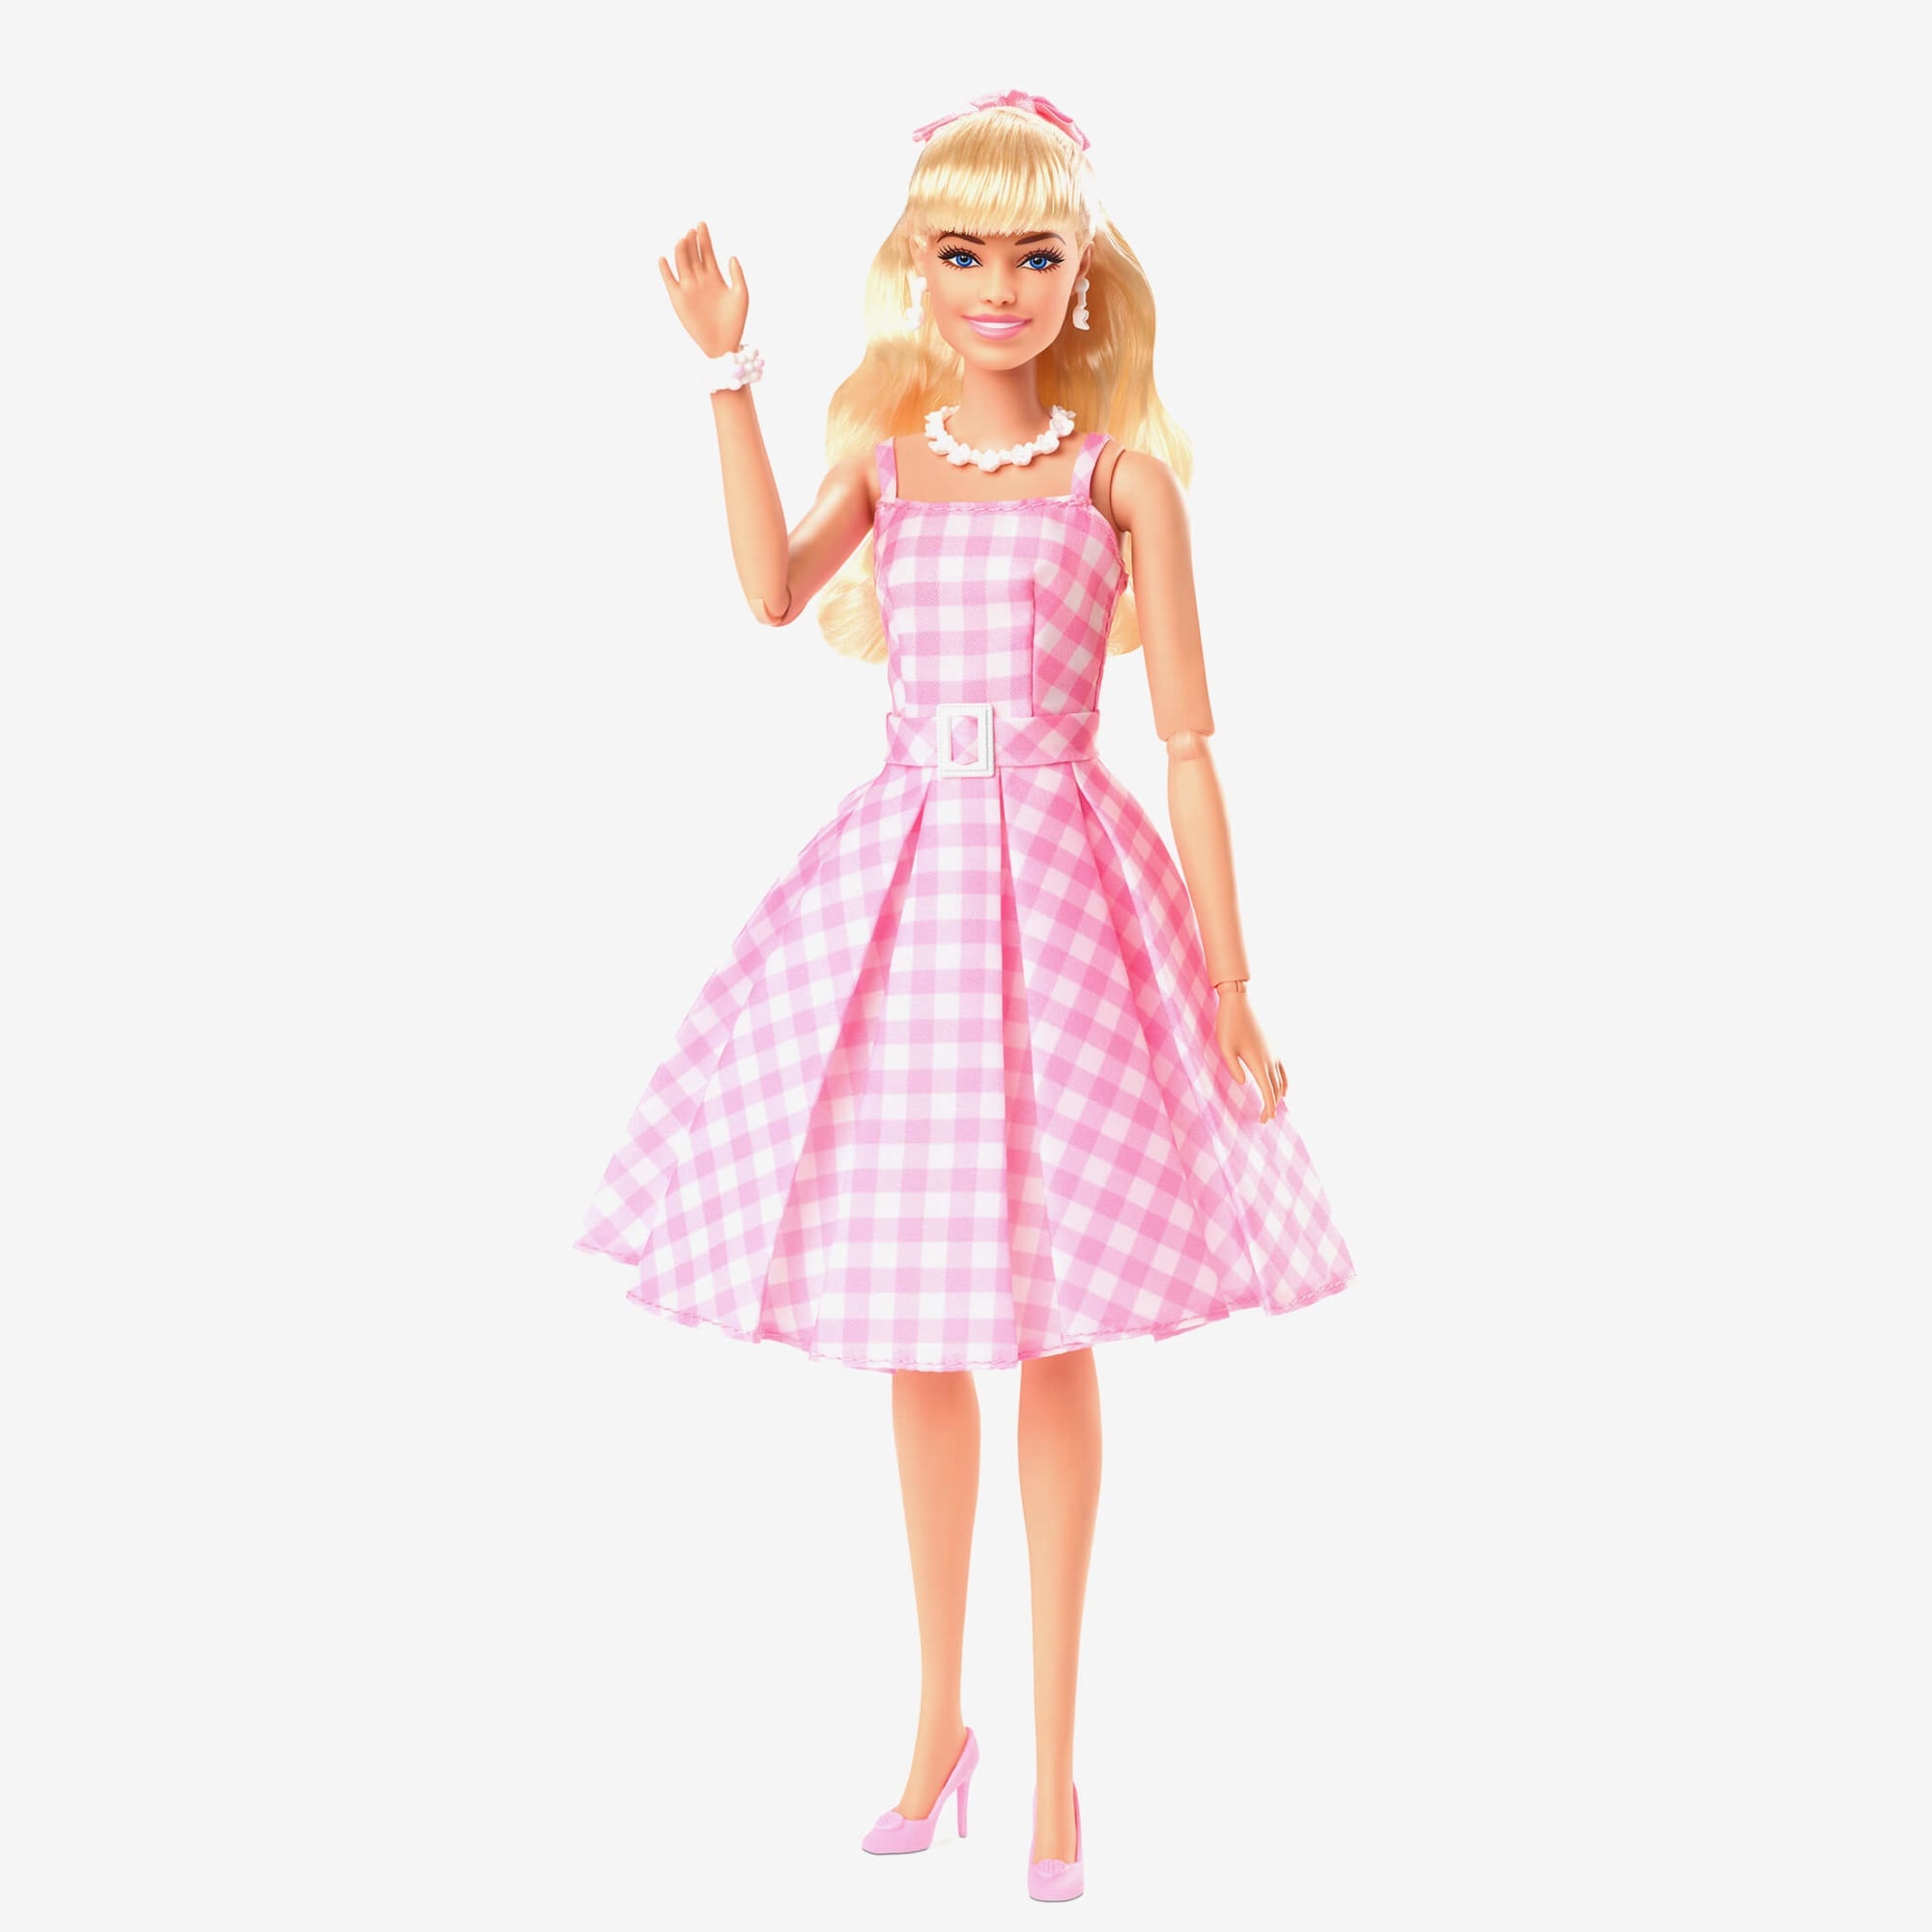 Barbie Princess Adventure Daisy Doll in Princess Fashion, Pink